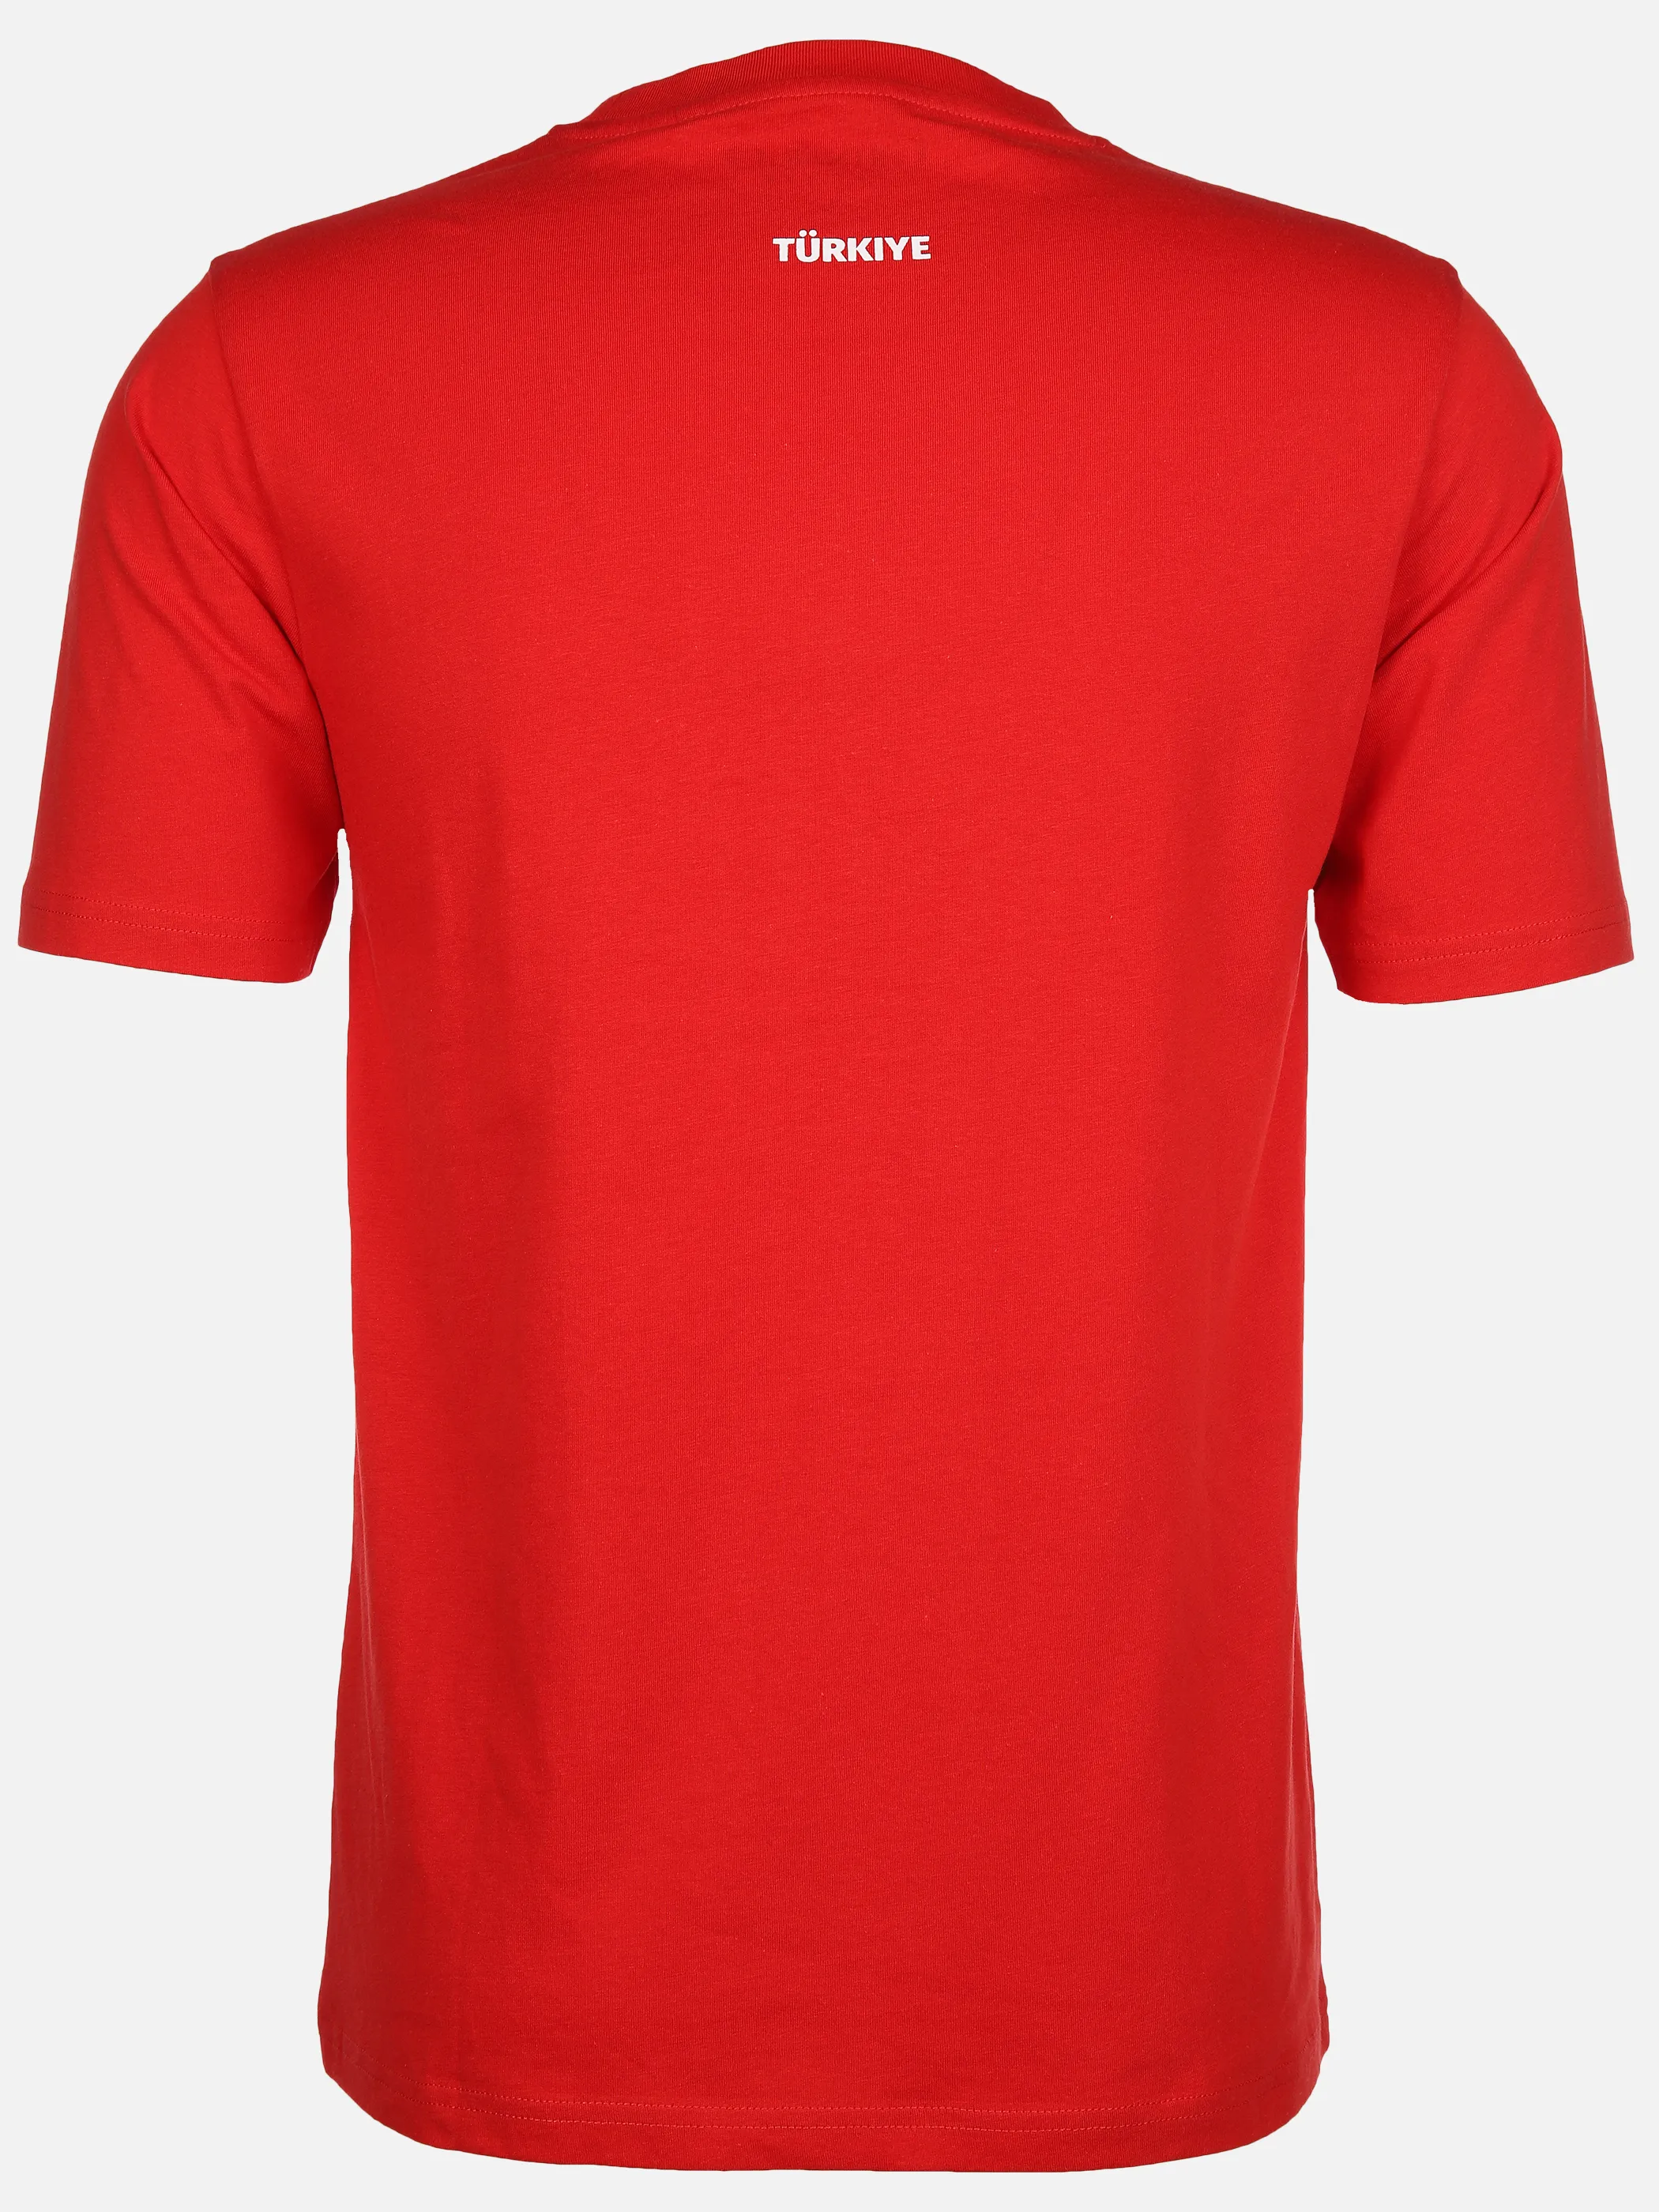 Grinario Sports Unisex T-Shirt EM24 Rot 889225 RED 2